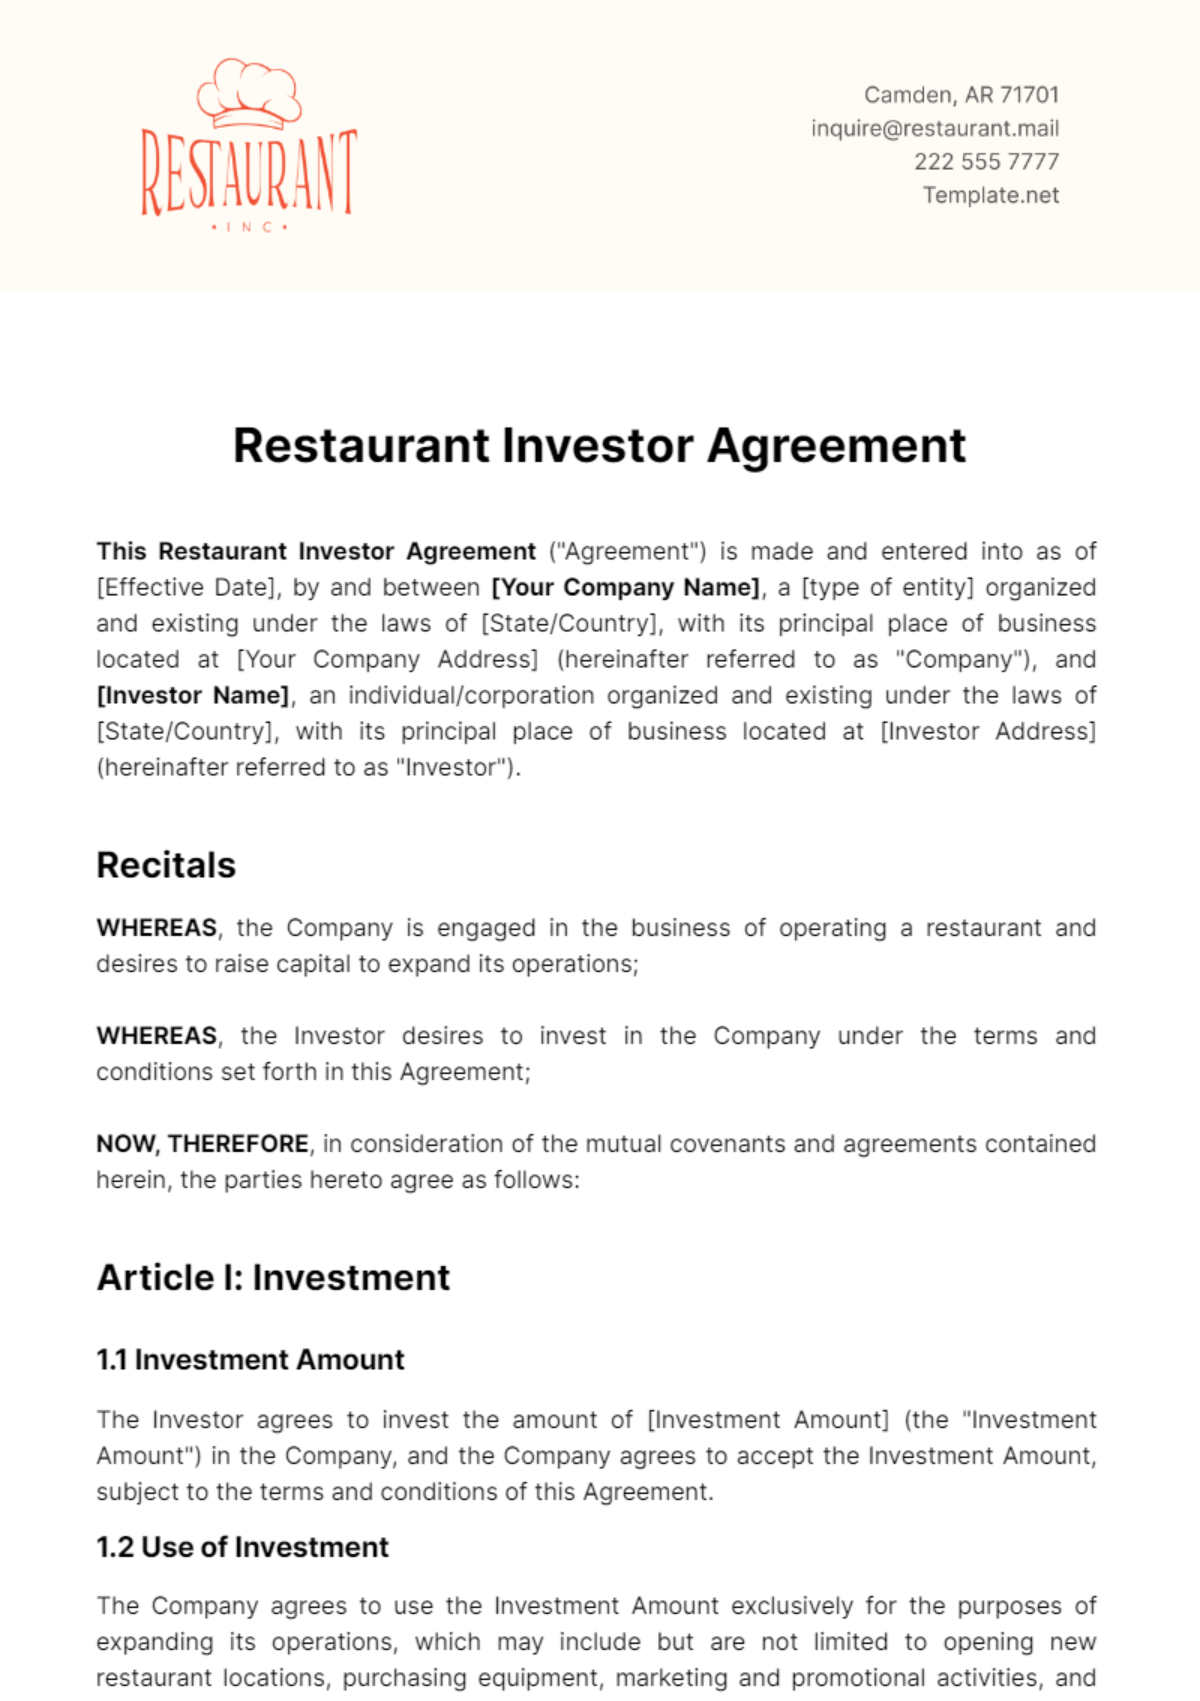 Restaurant Investor Agreement Template